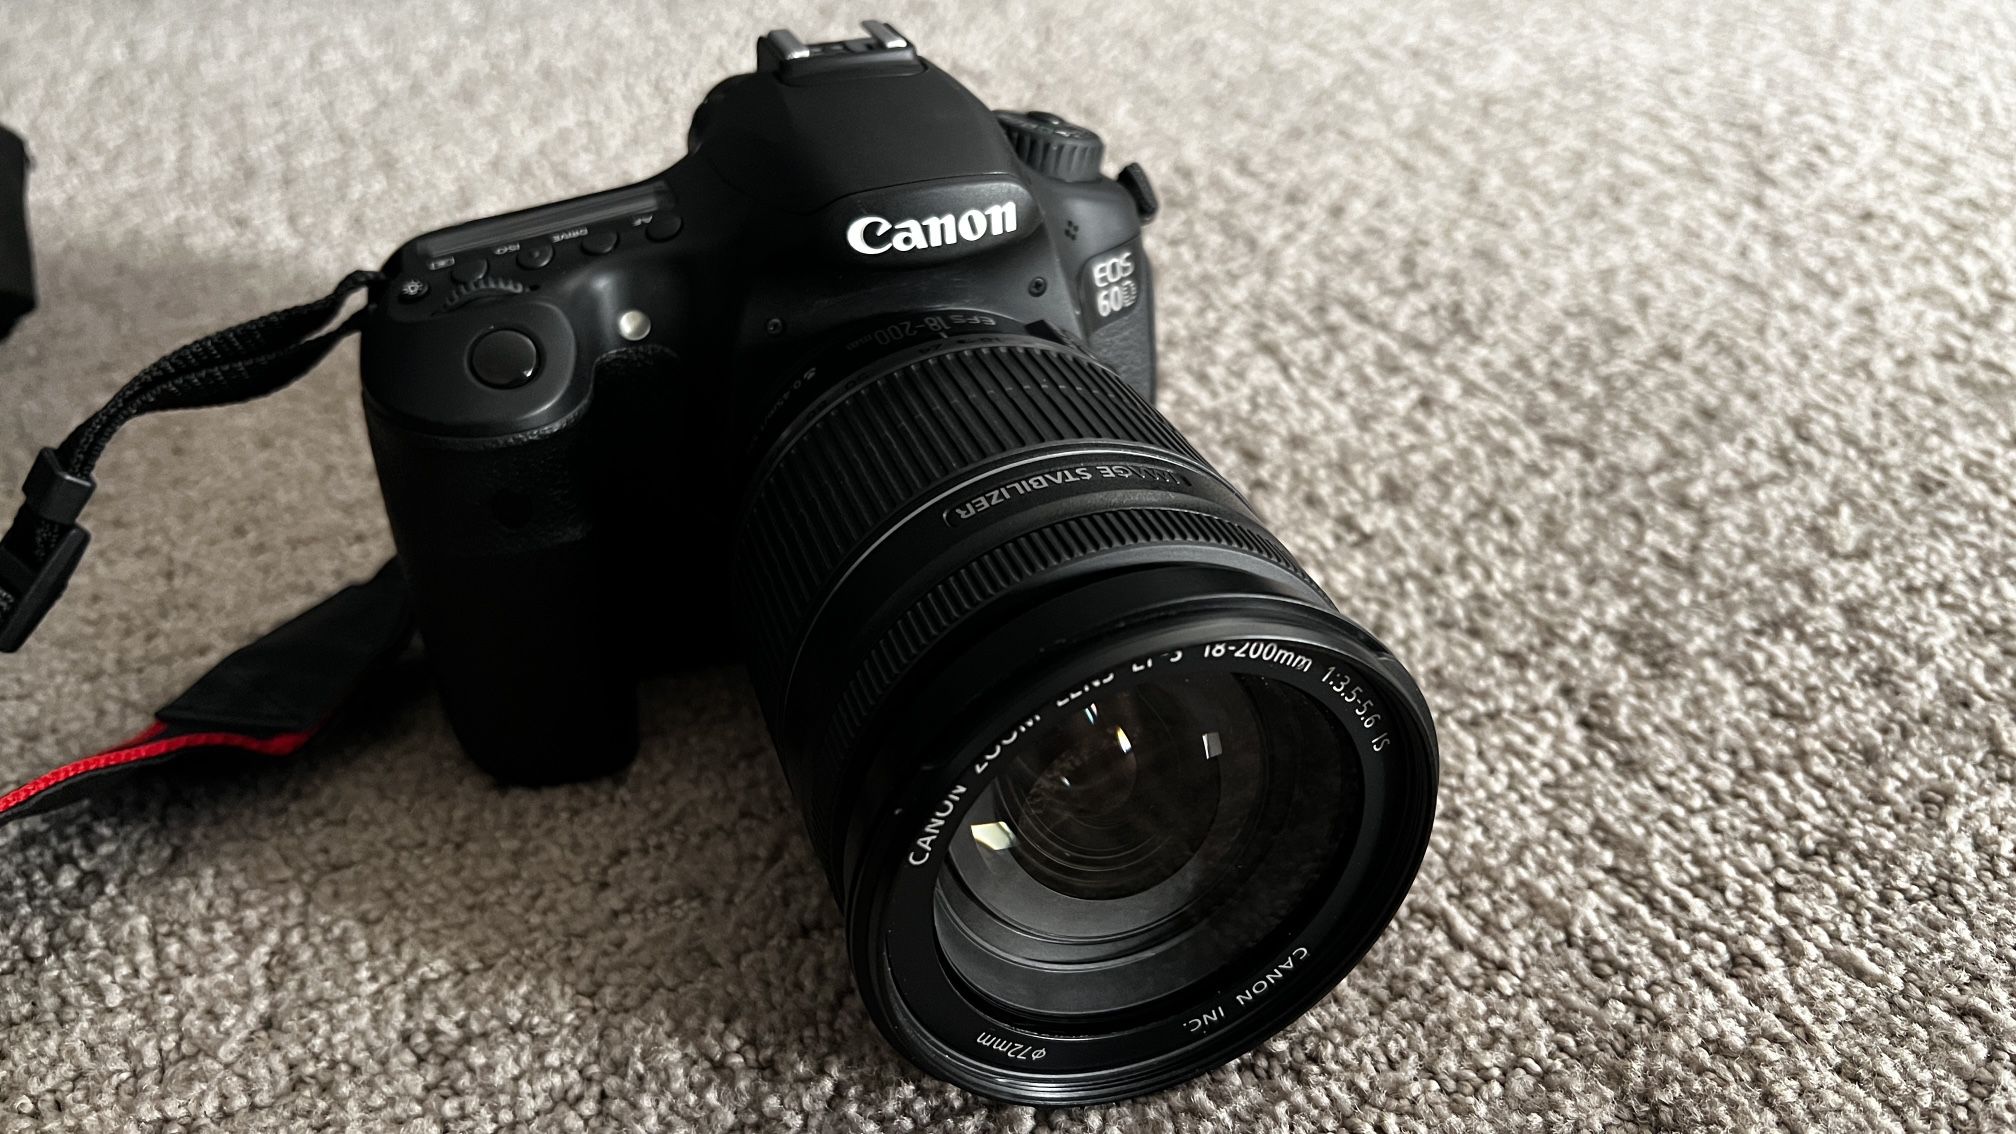 Canon EOS 60D 18 MP w EF-S 18-200mm Lens